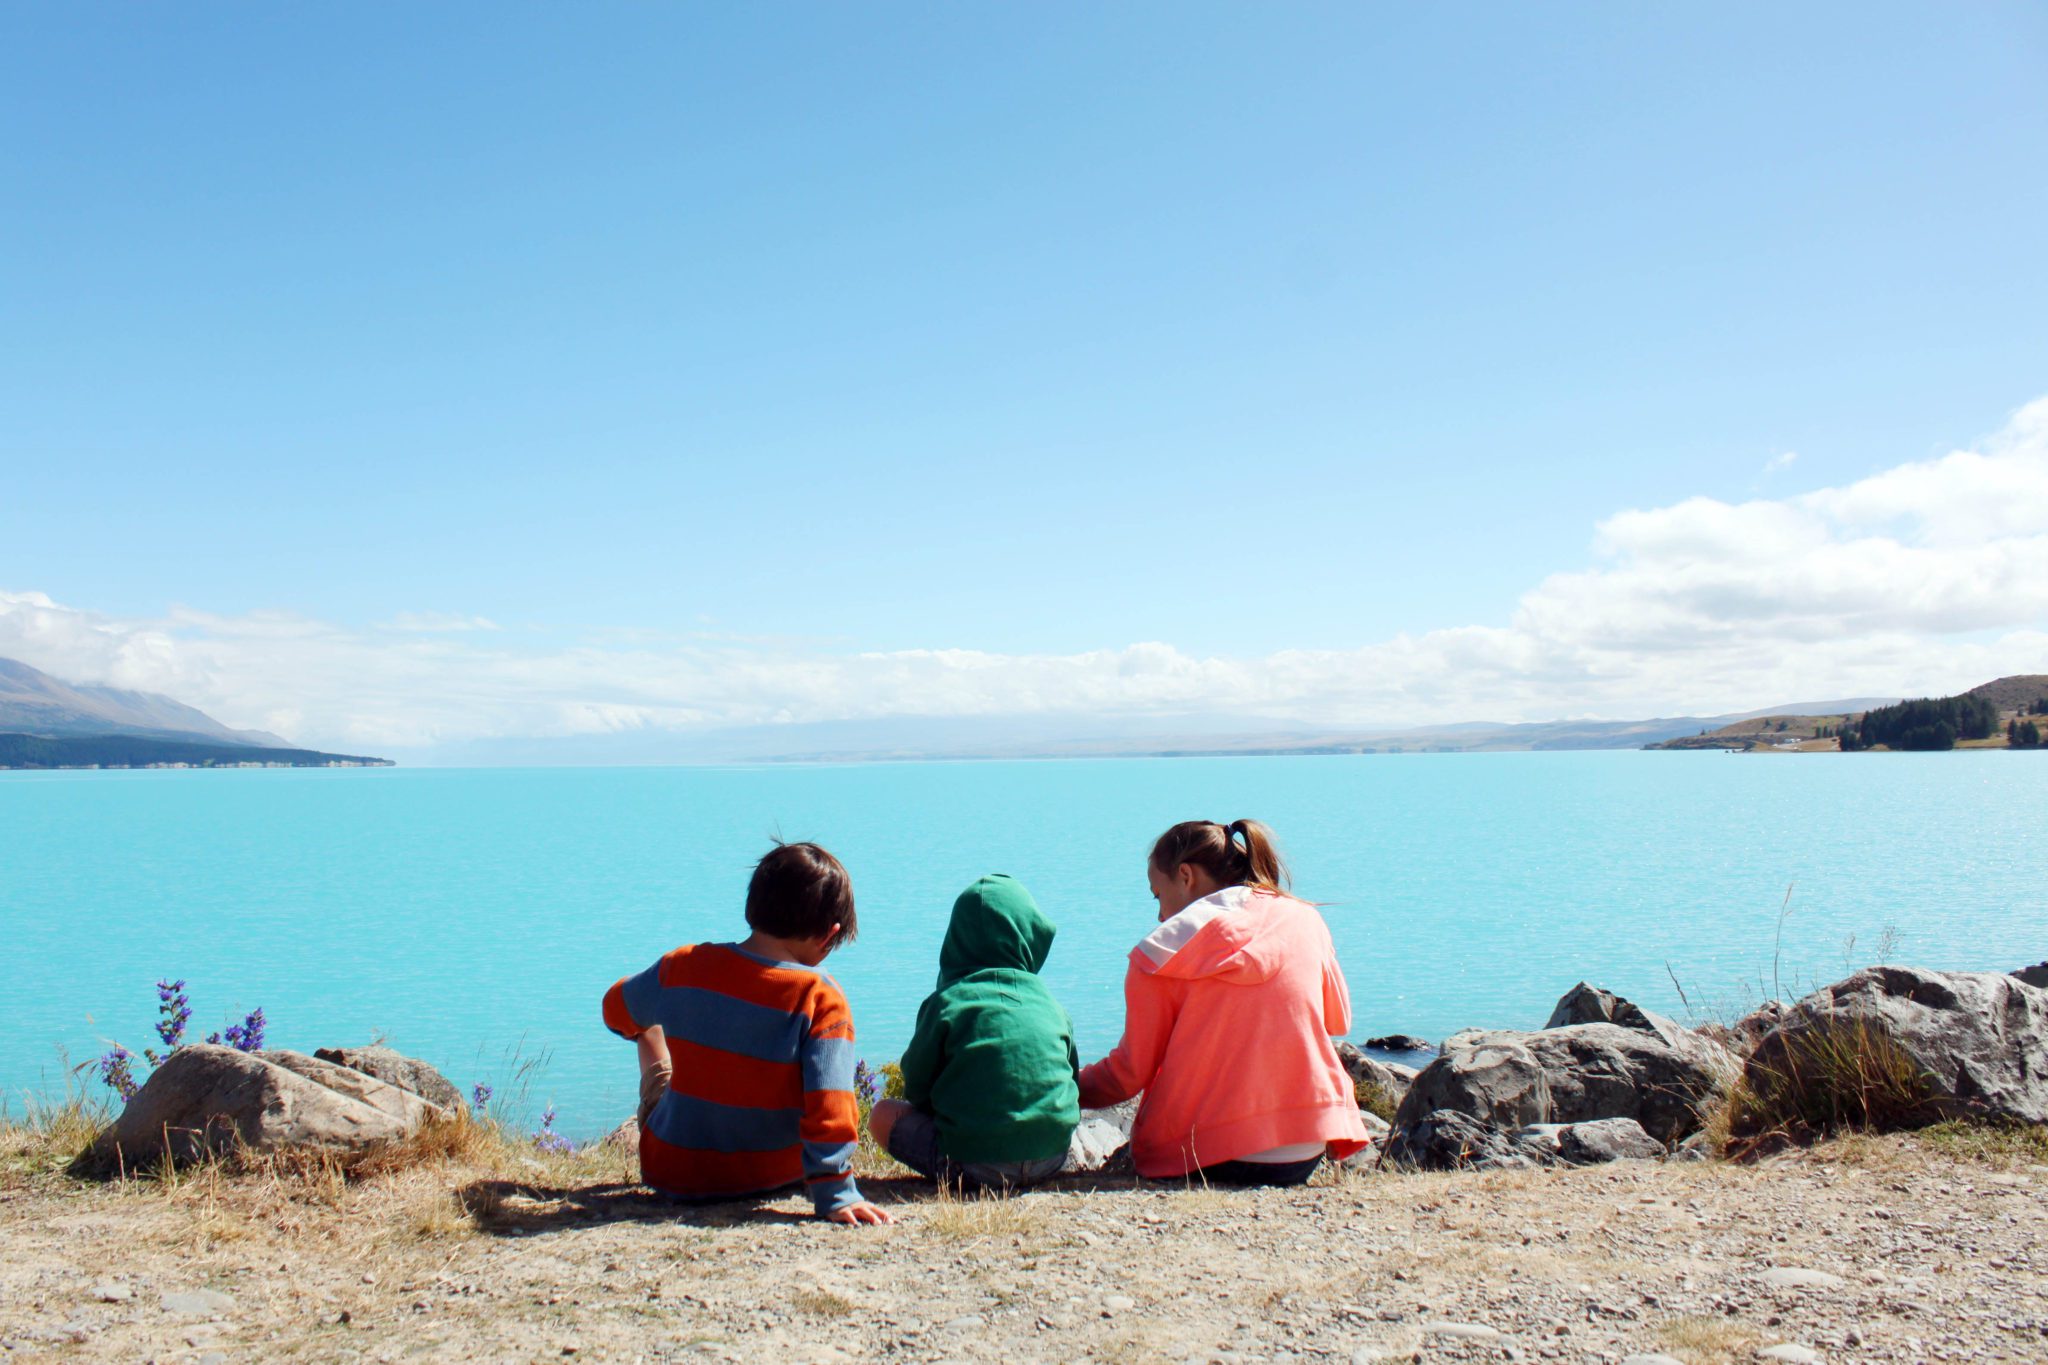 Lake Pukaki- must see spots on New Zealand's South Island